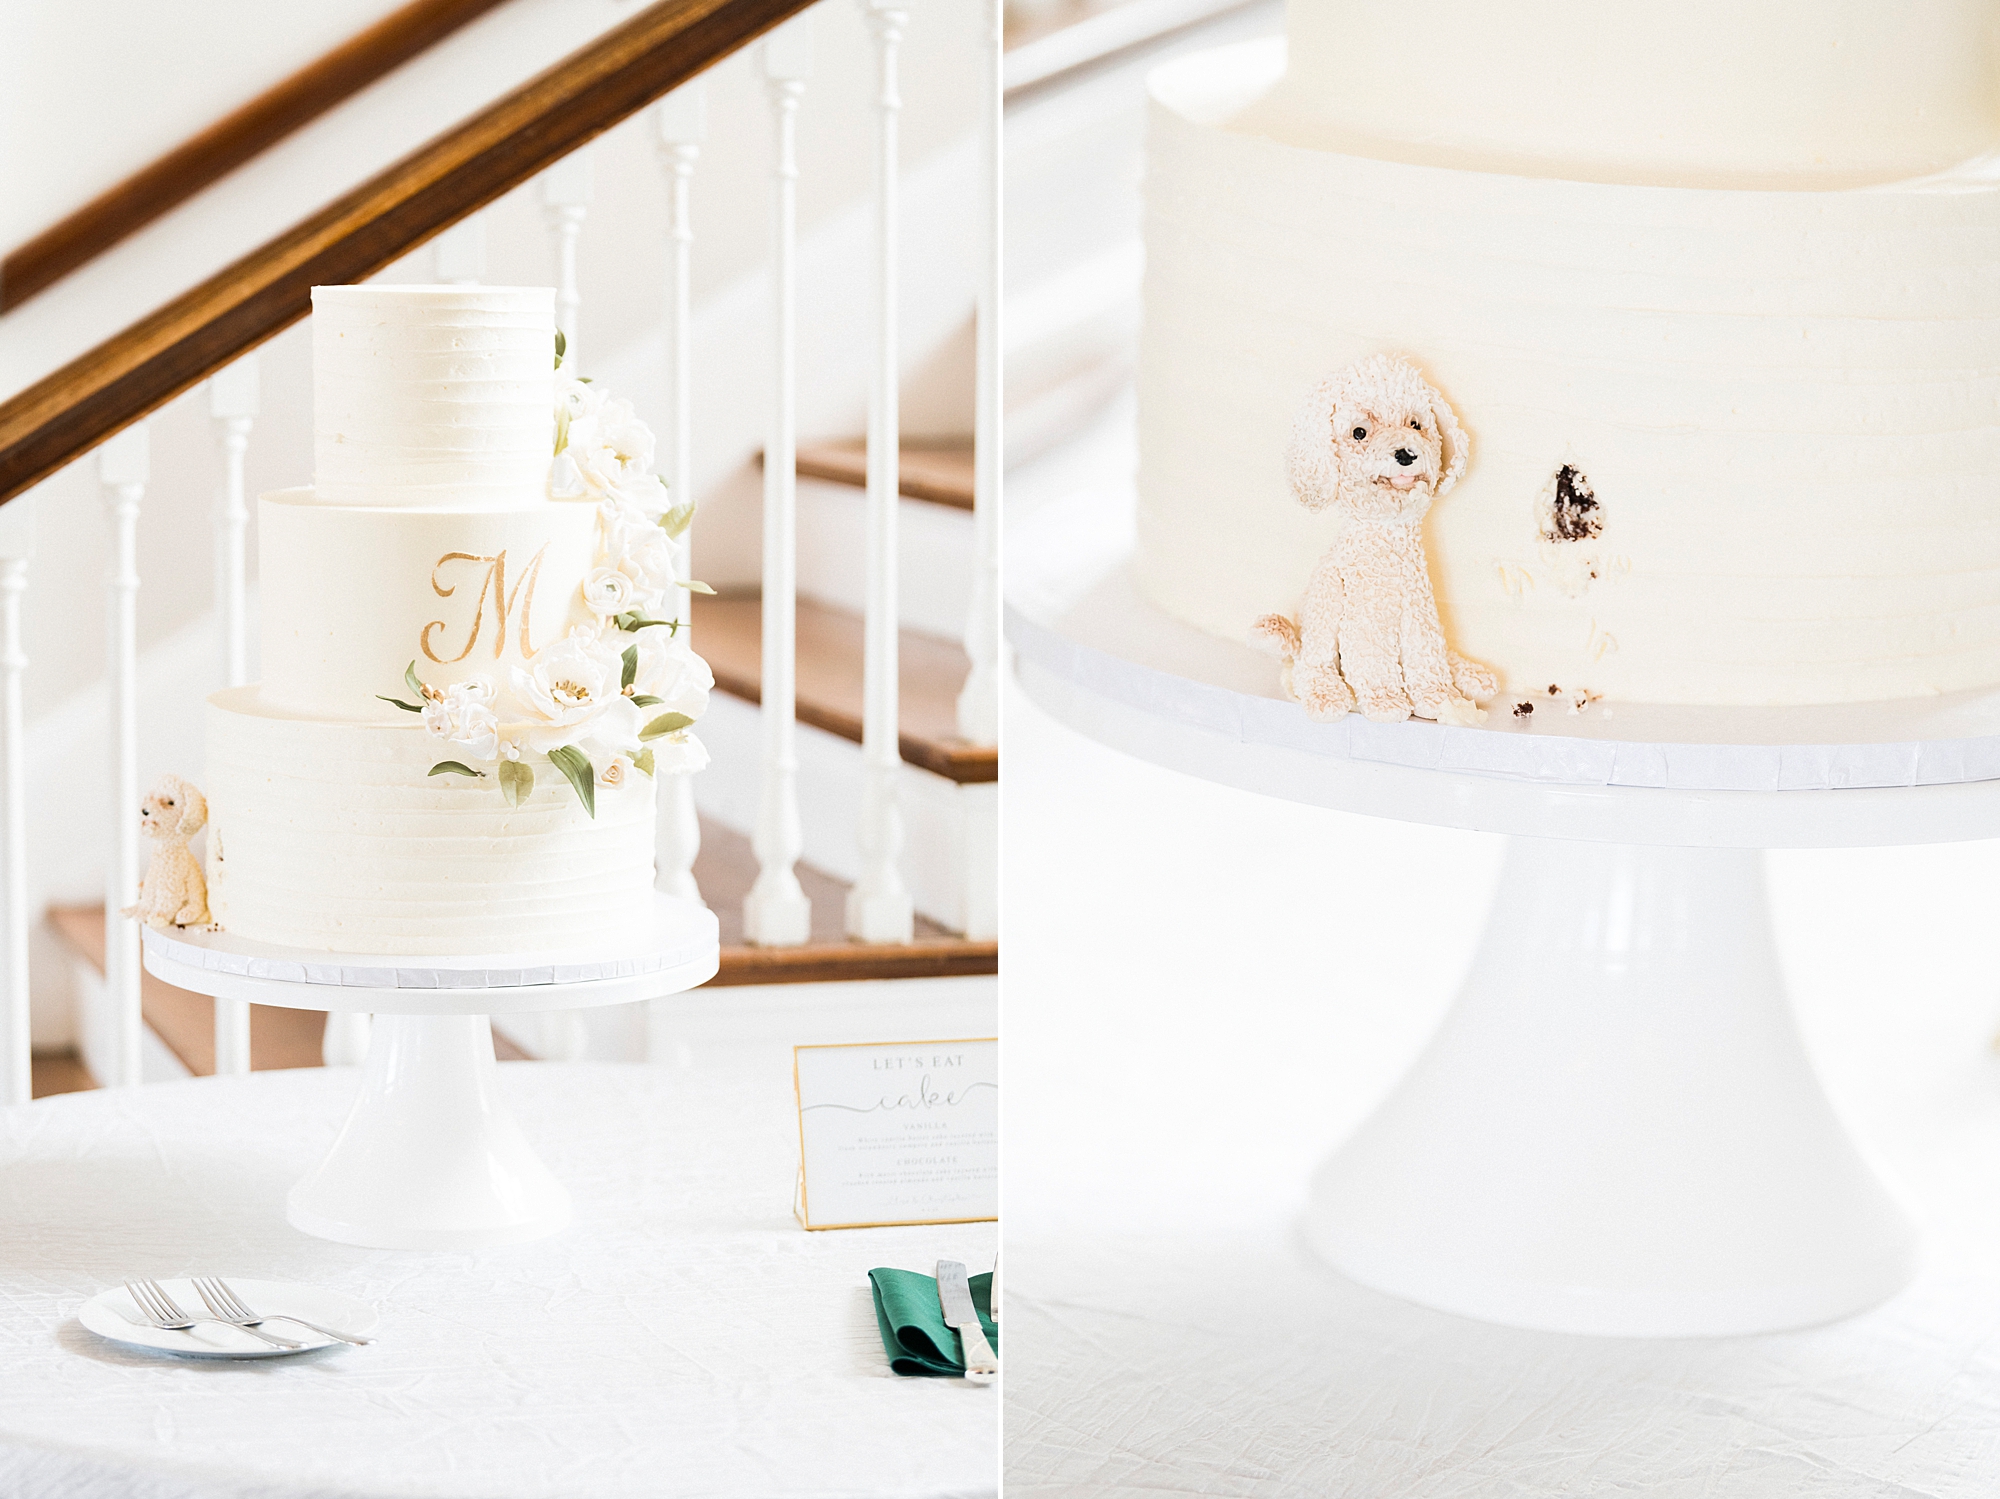 tiered wedding cake with dog details for spring Separk Mansion wedding reception